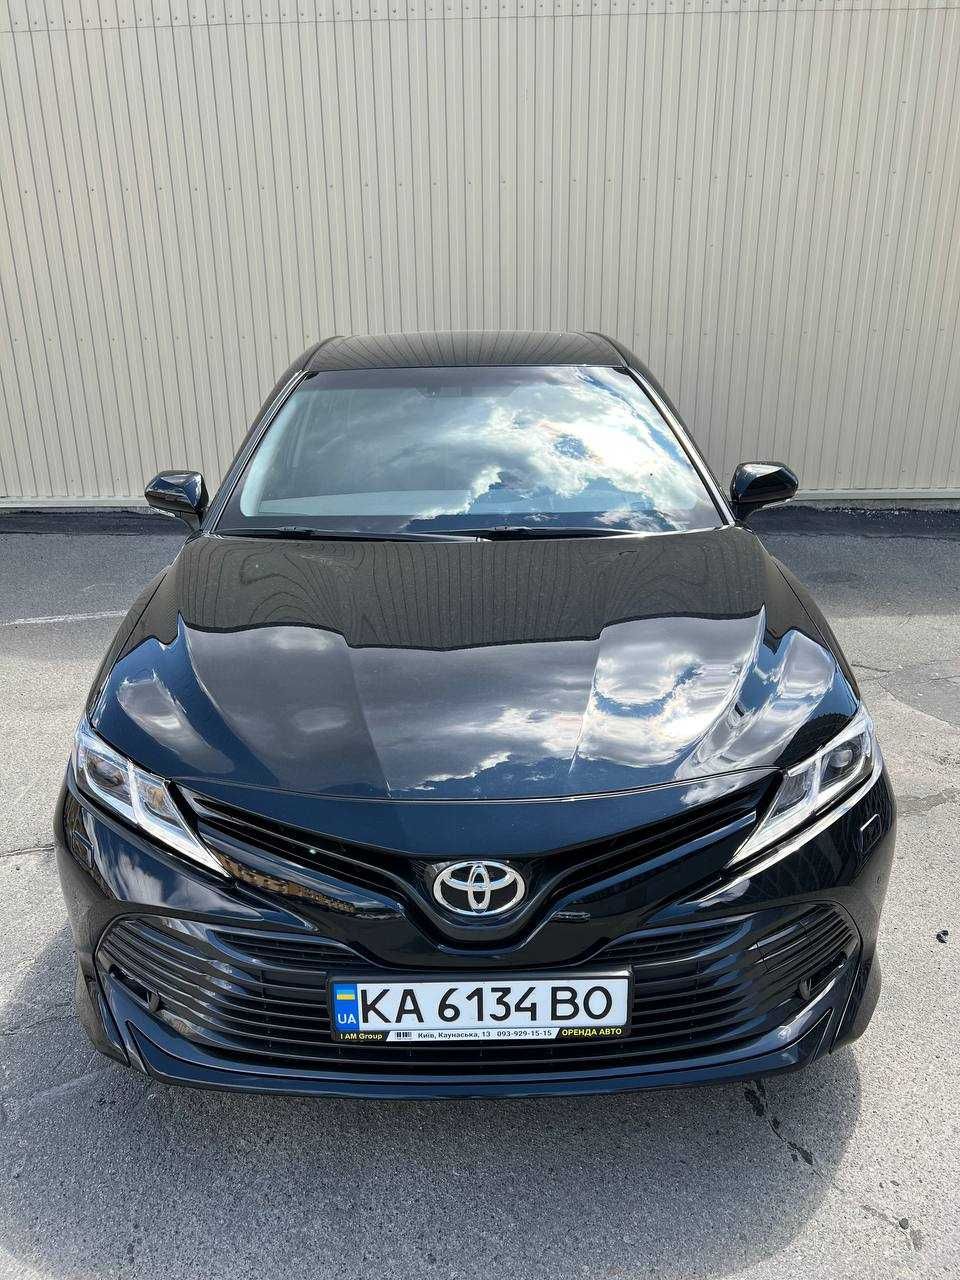 Aренда автомобиля прокат автомобиля Киев Toyota Camry 2020